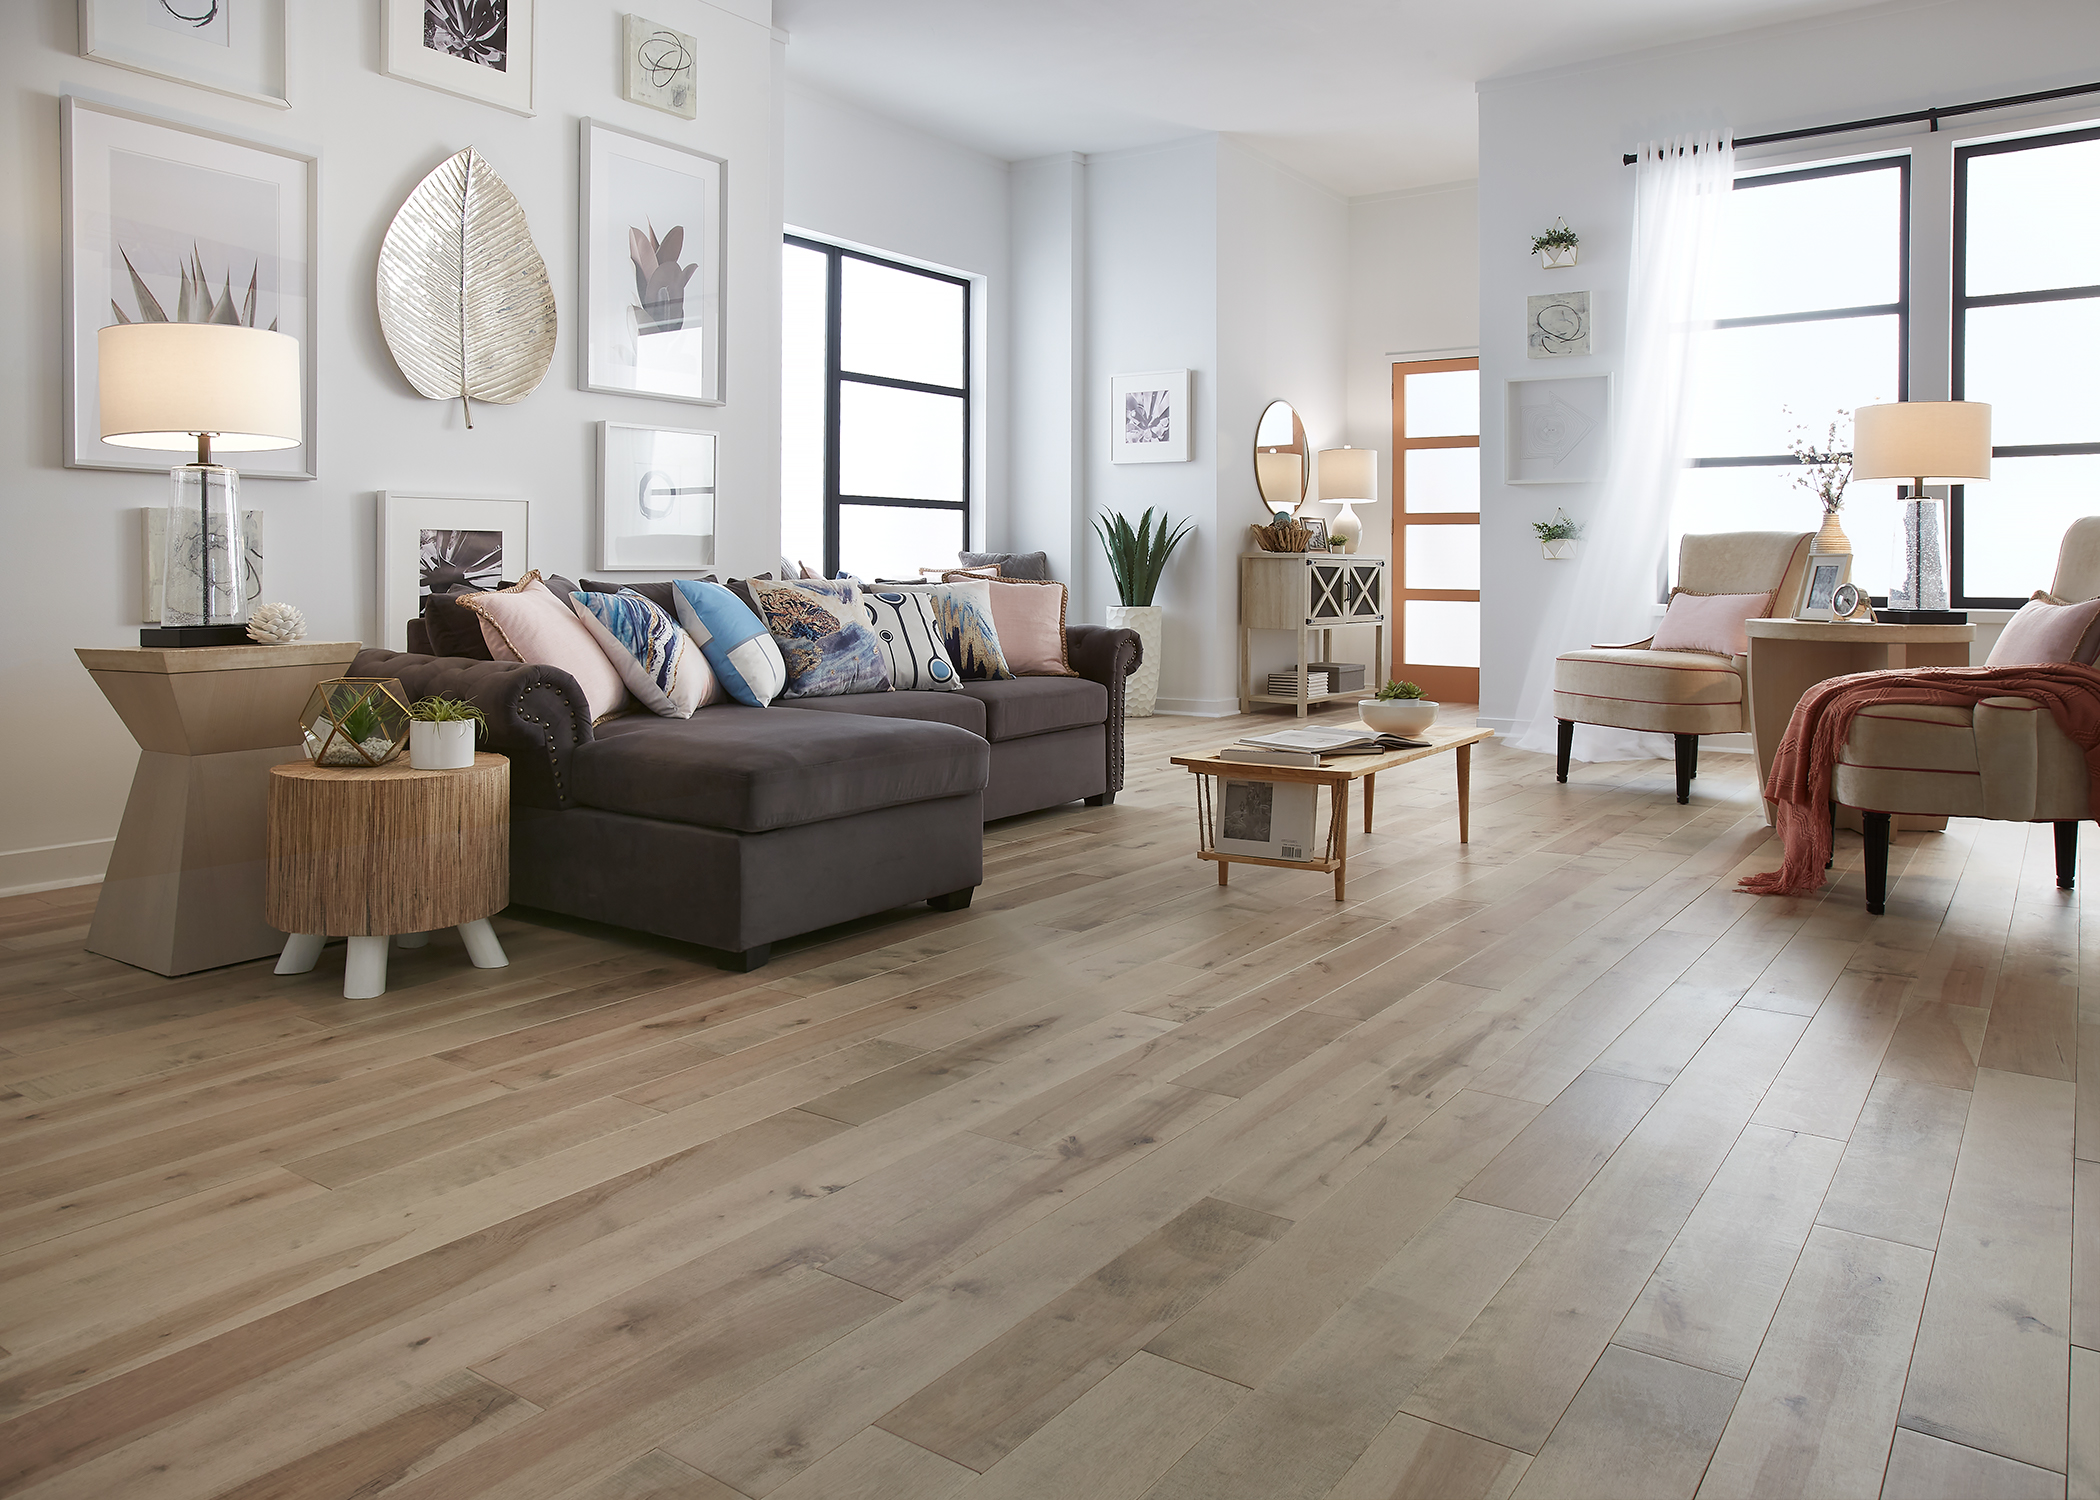 living room with hardwood flooring from ll flooring